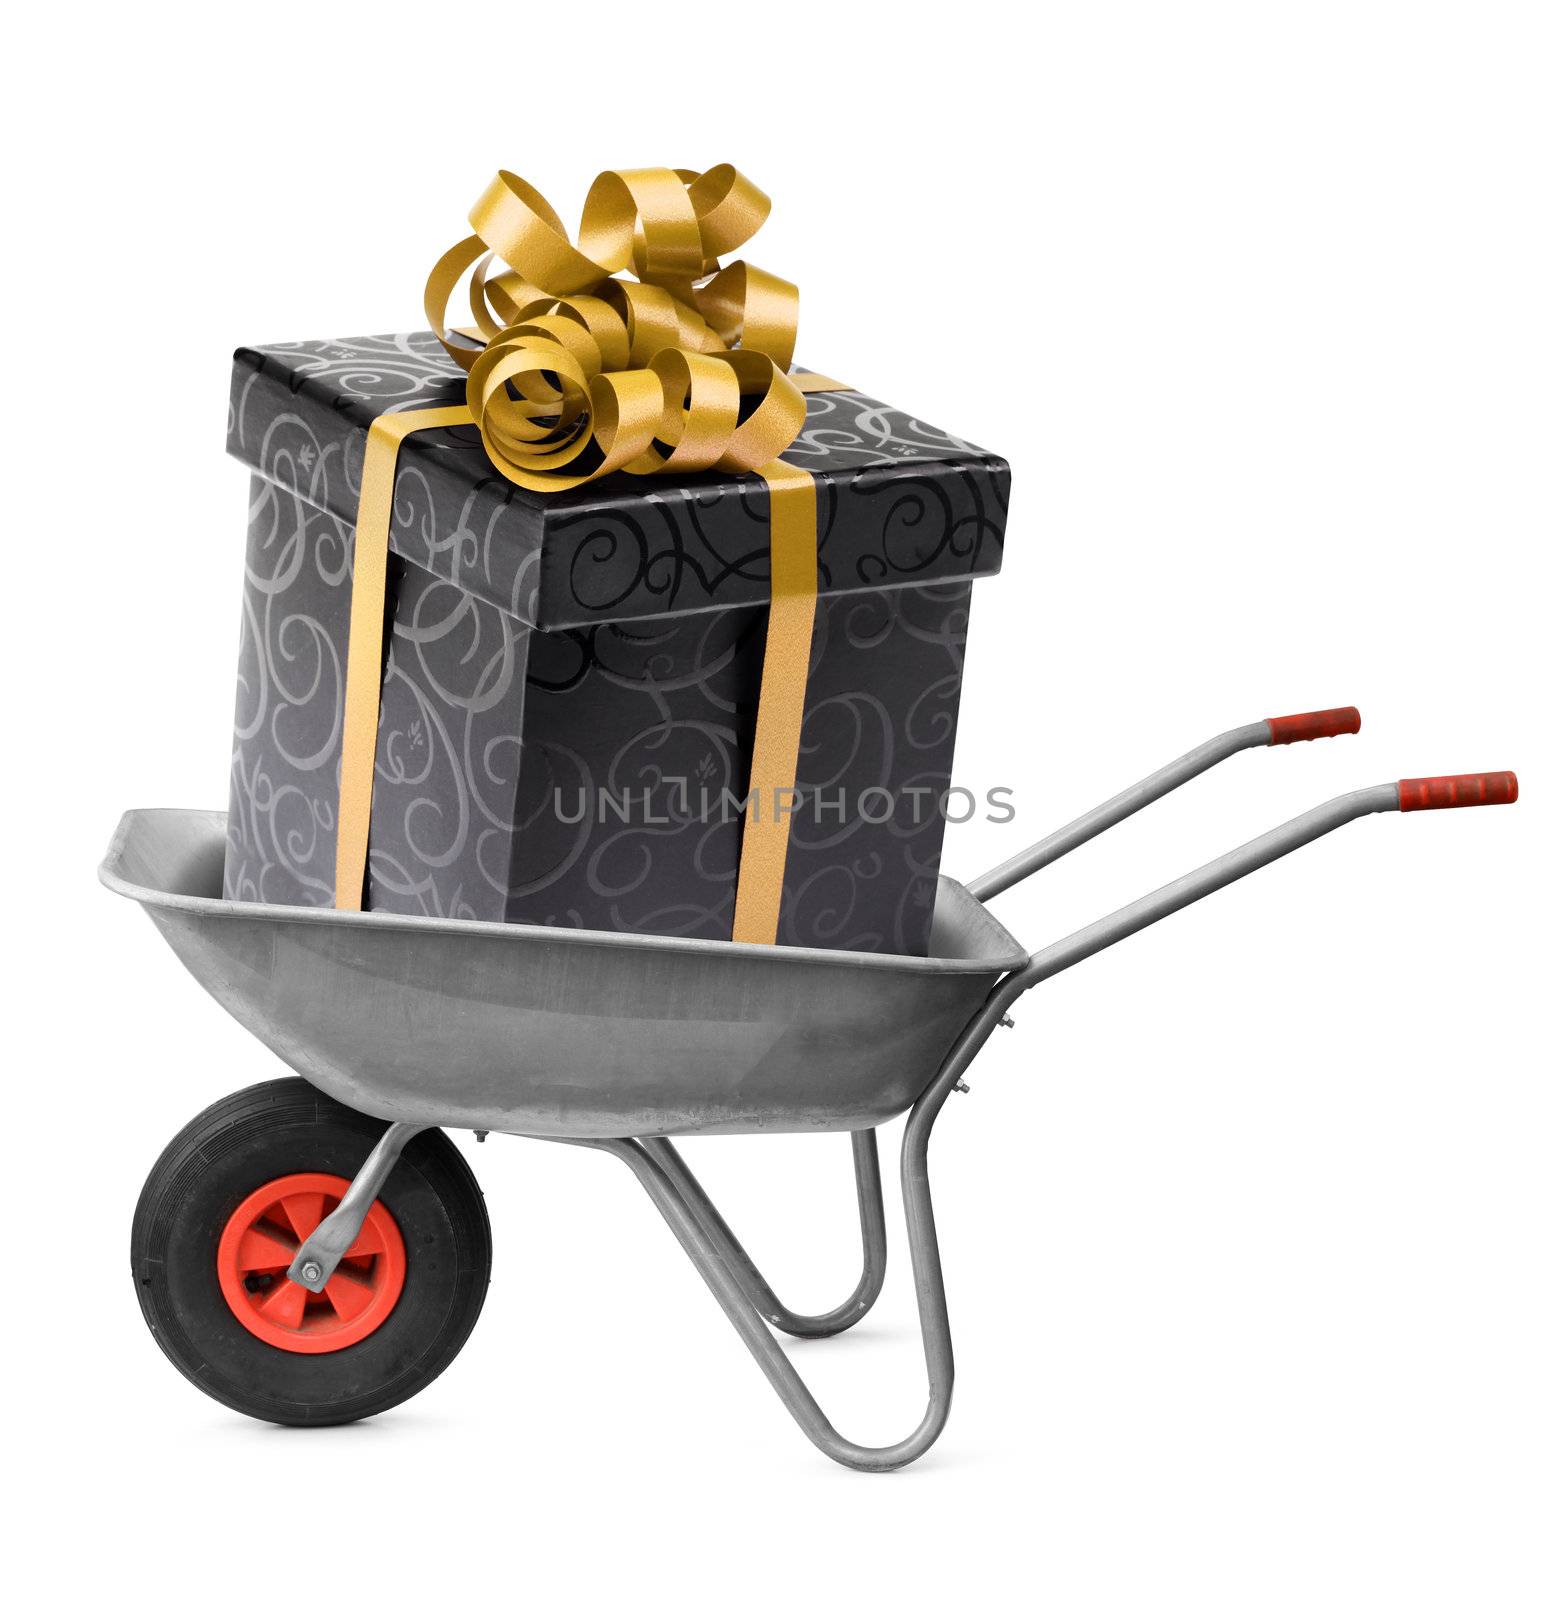 Big present box in wheelbarrow by anterovium